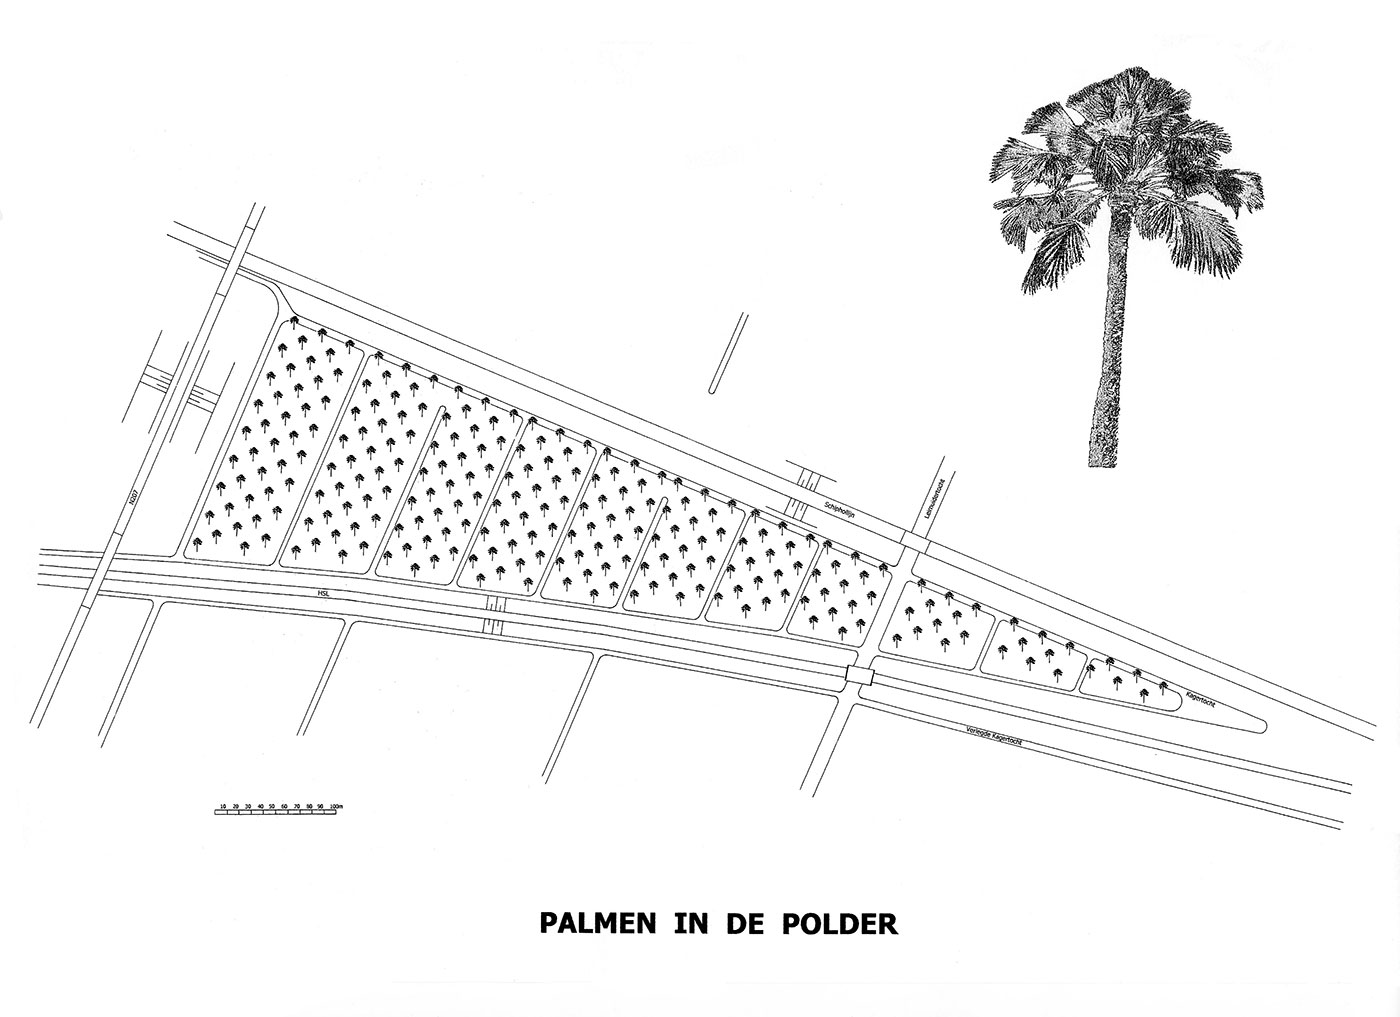 Palmen-in-de-polder-1.jpg